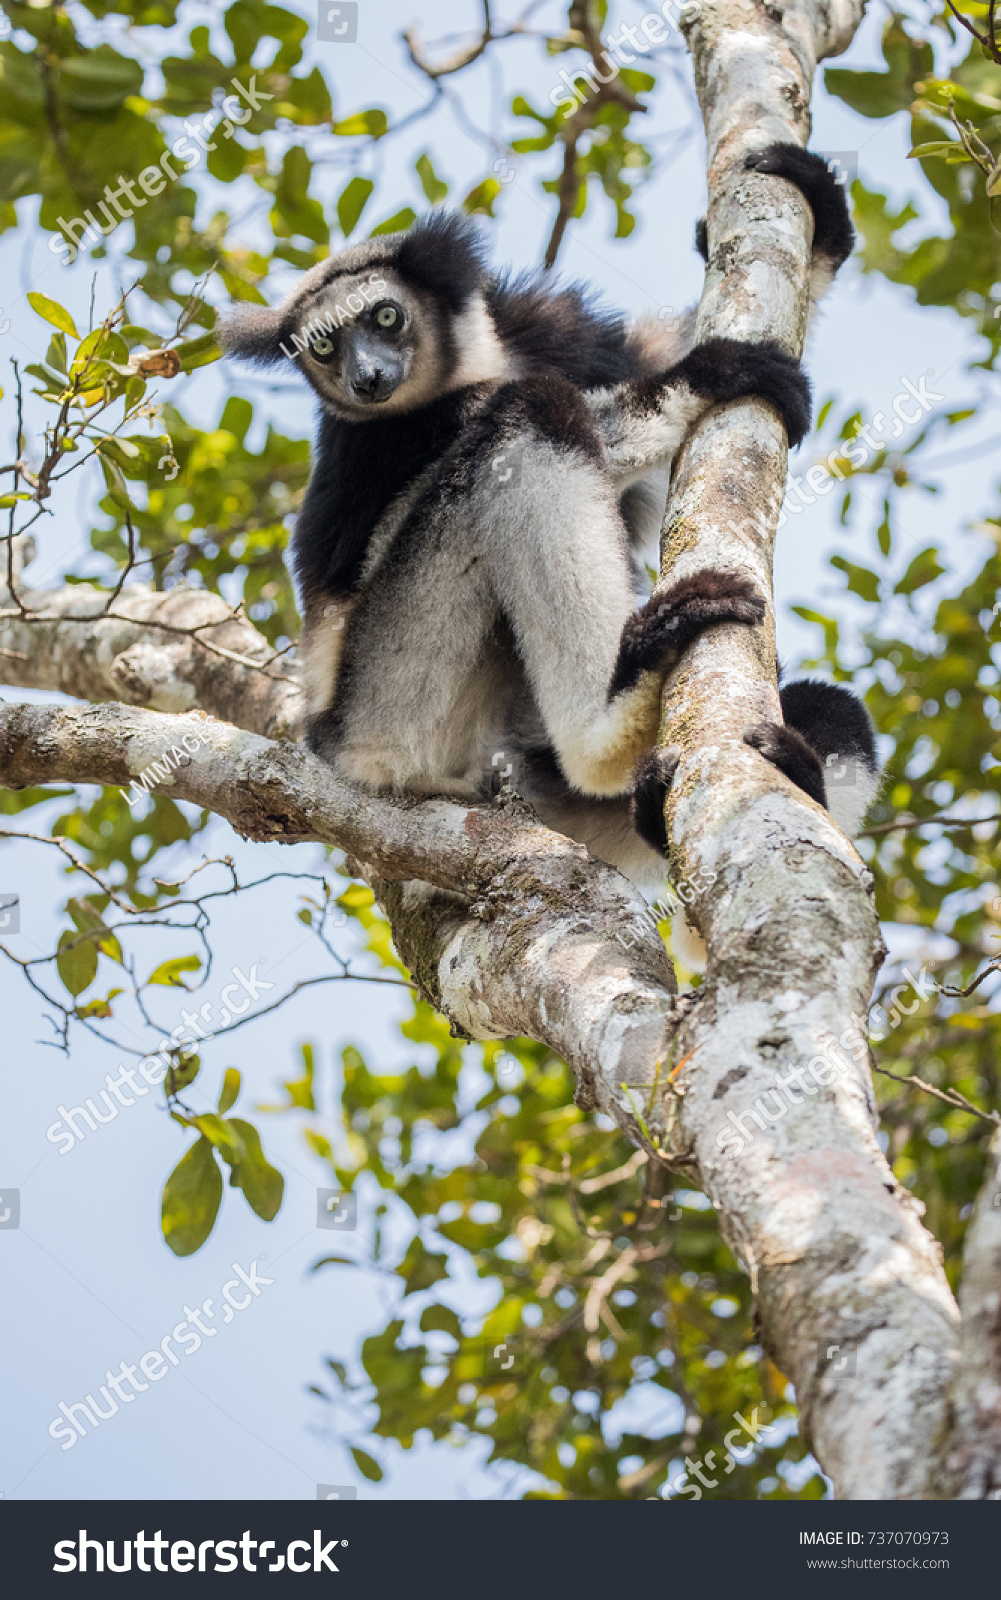 lemur teddy bear